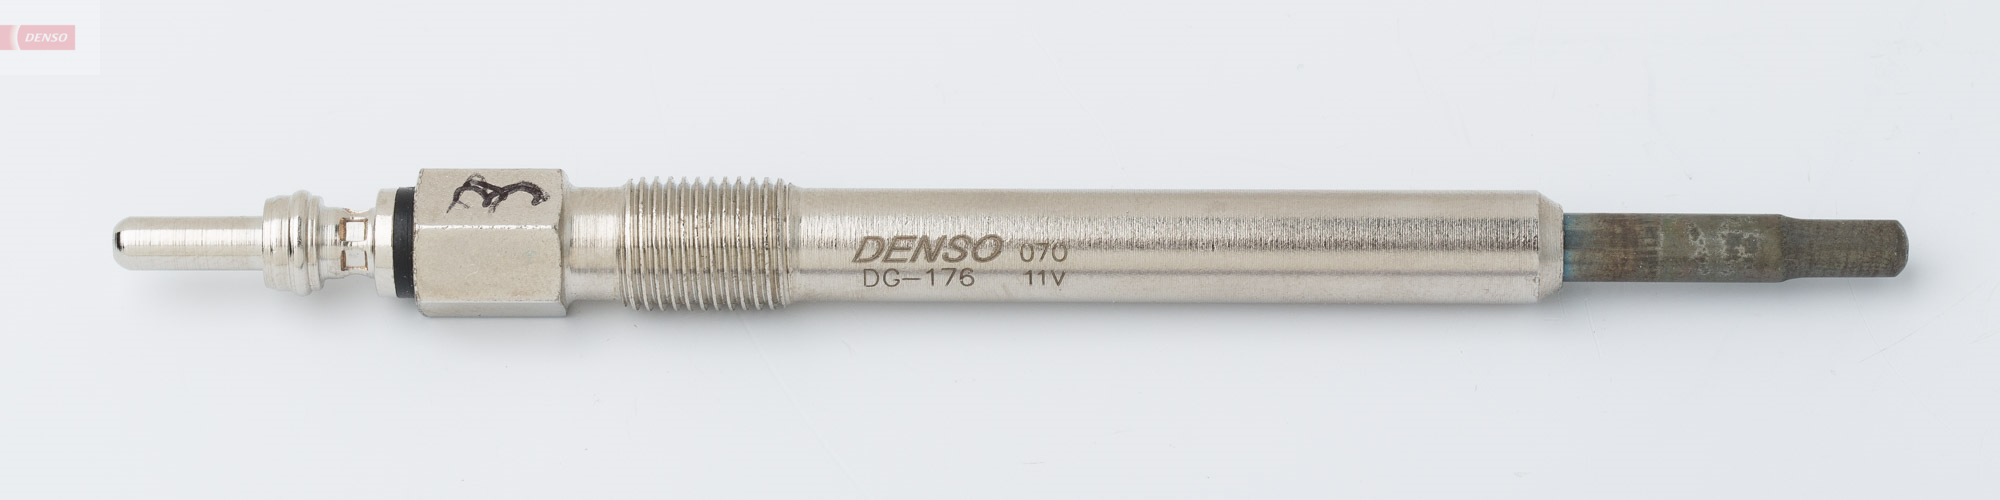 Denso DG-176